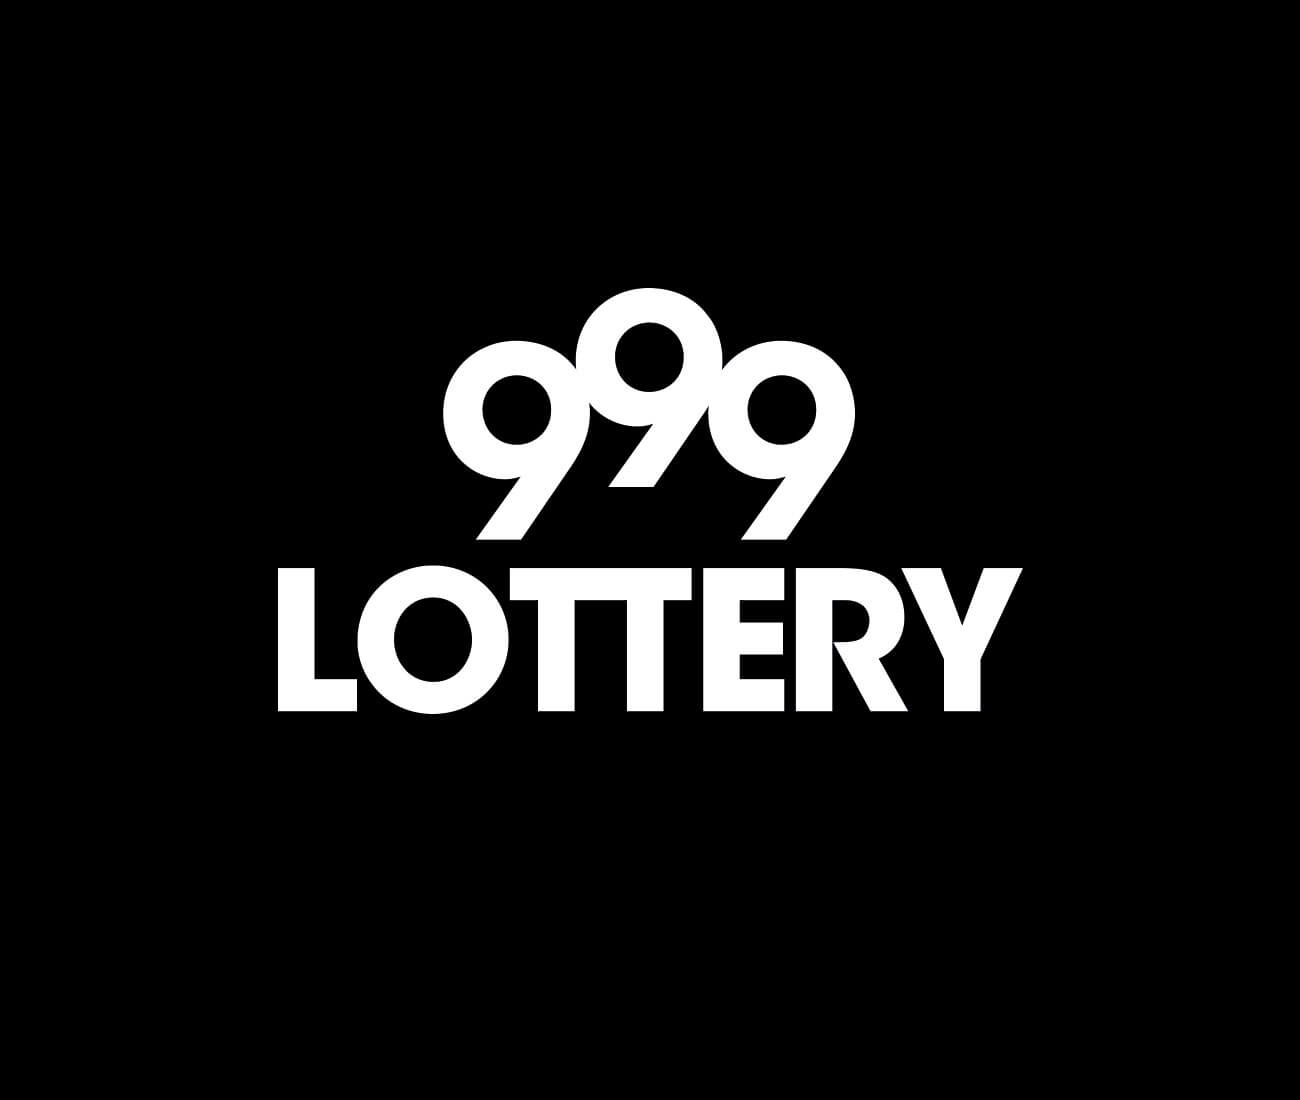 999 Lottery